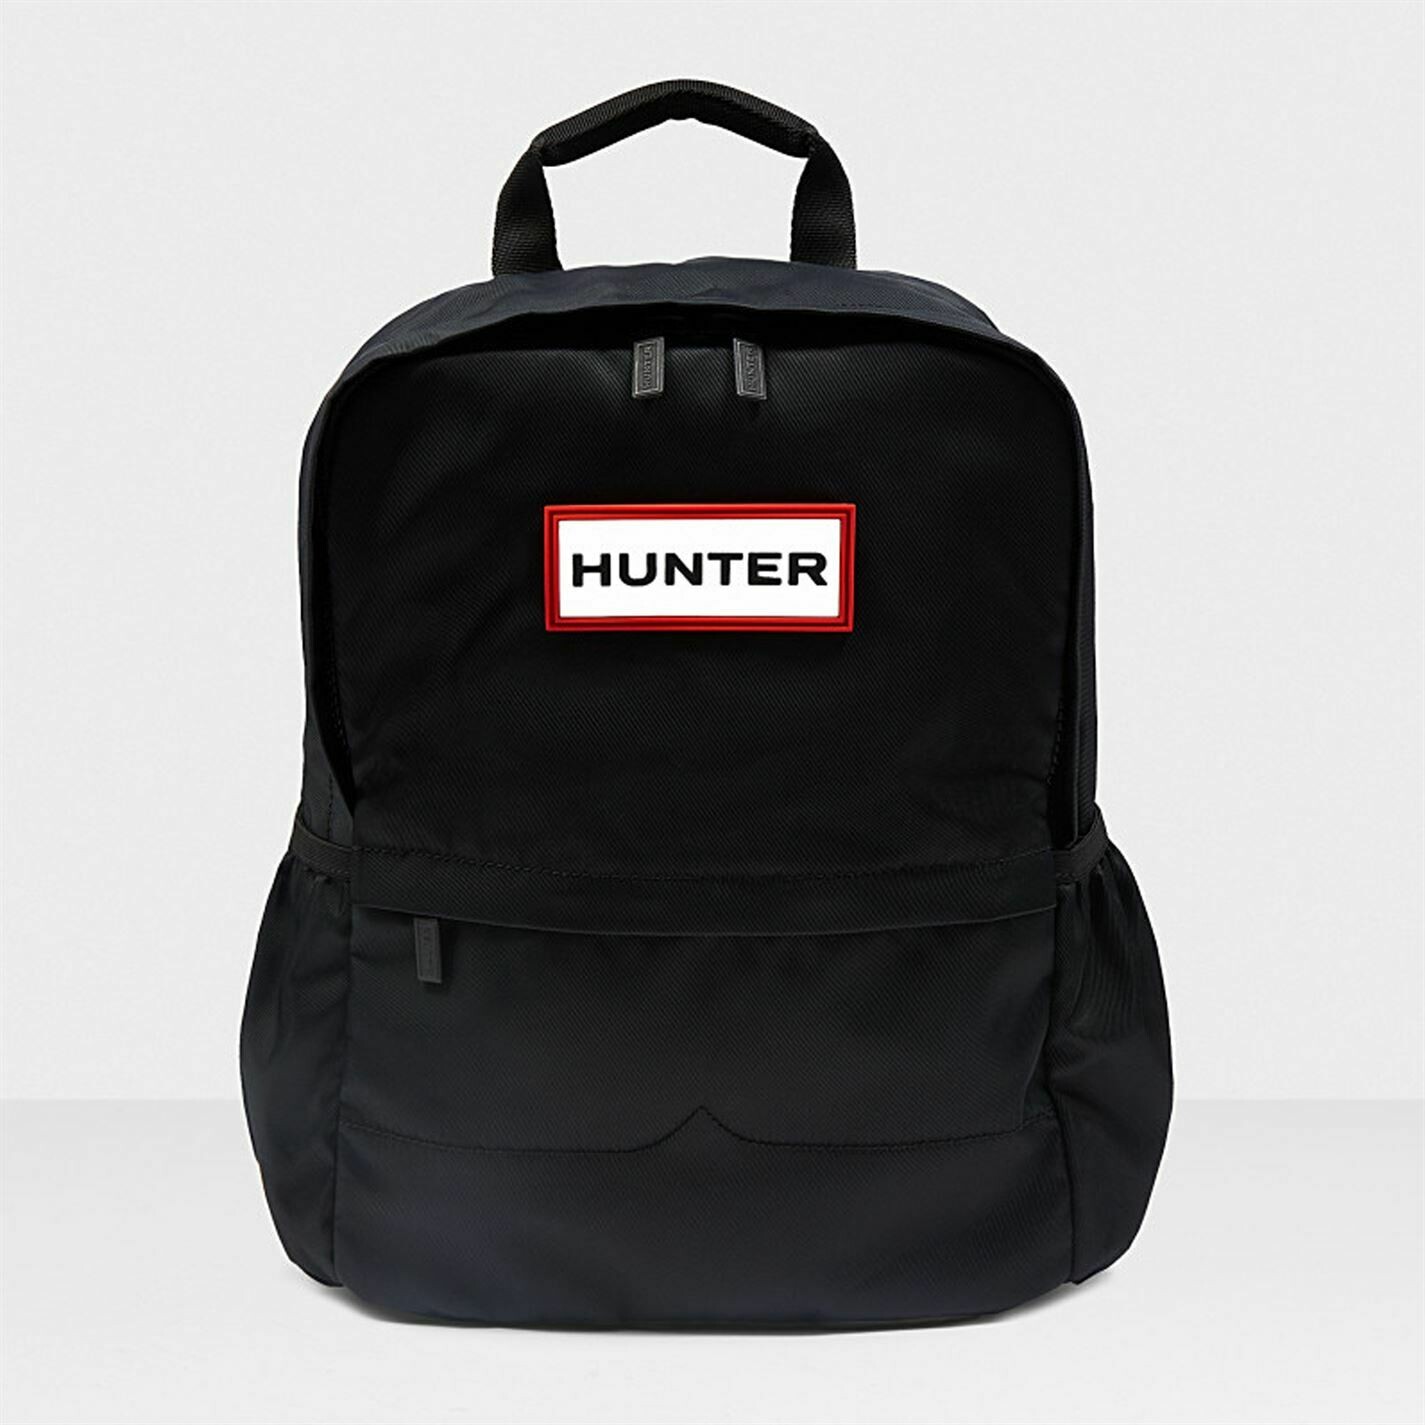 Hunter Backpack in Black